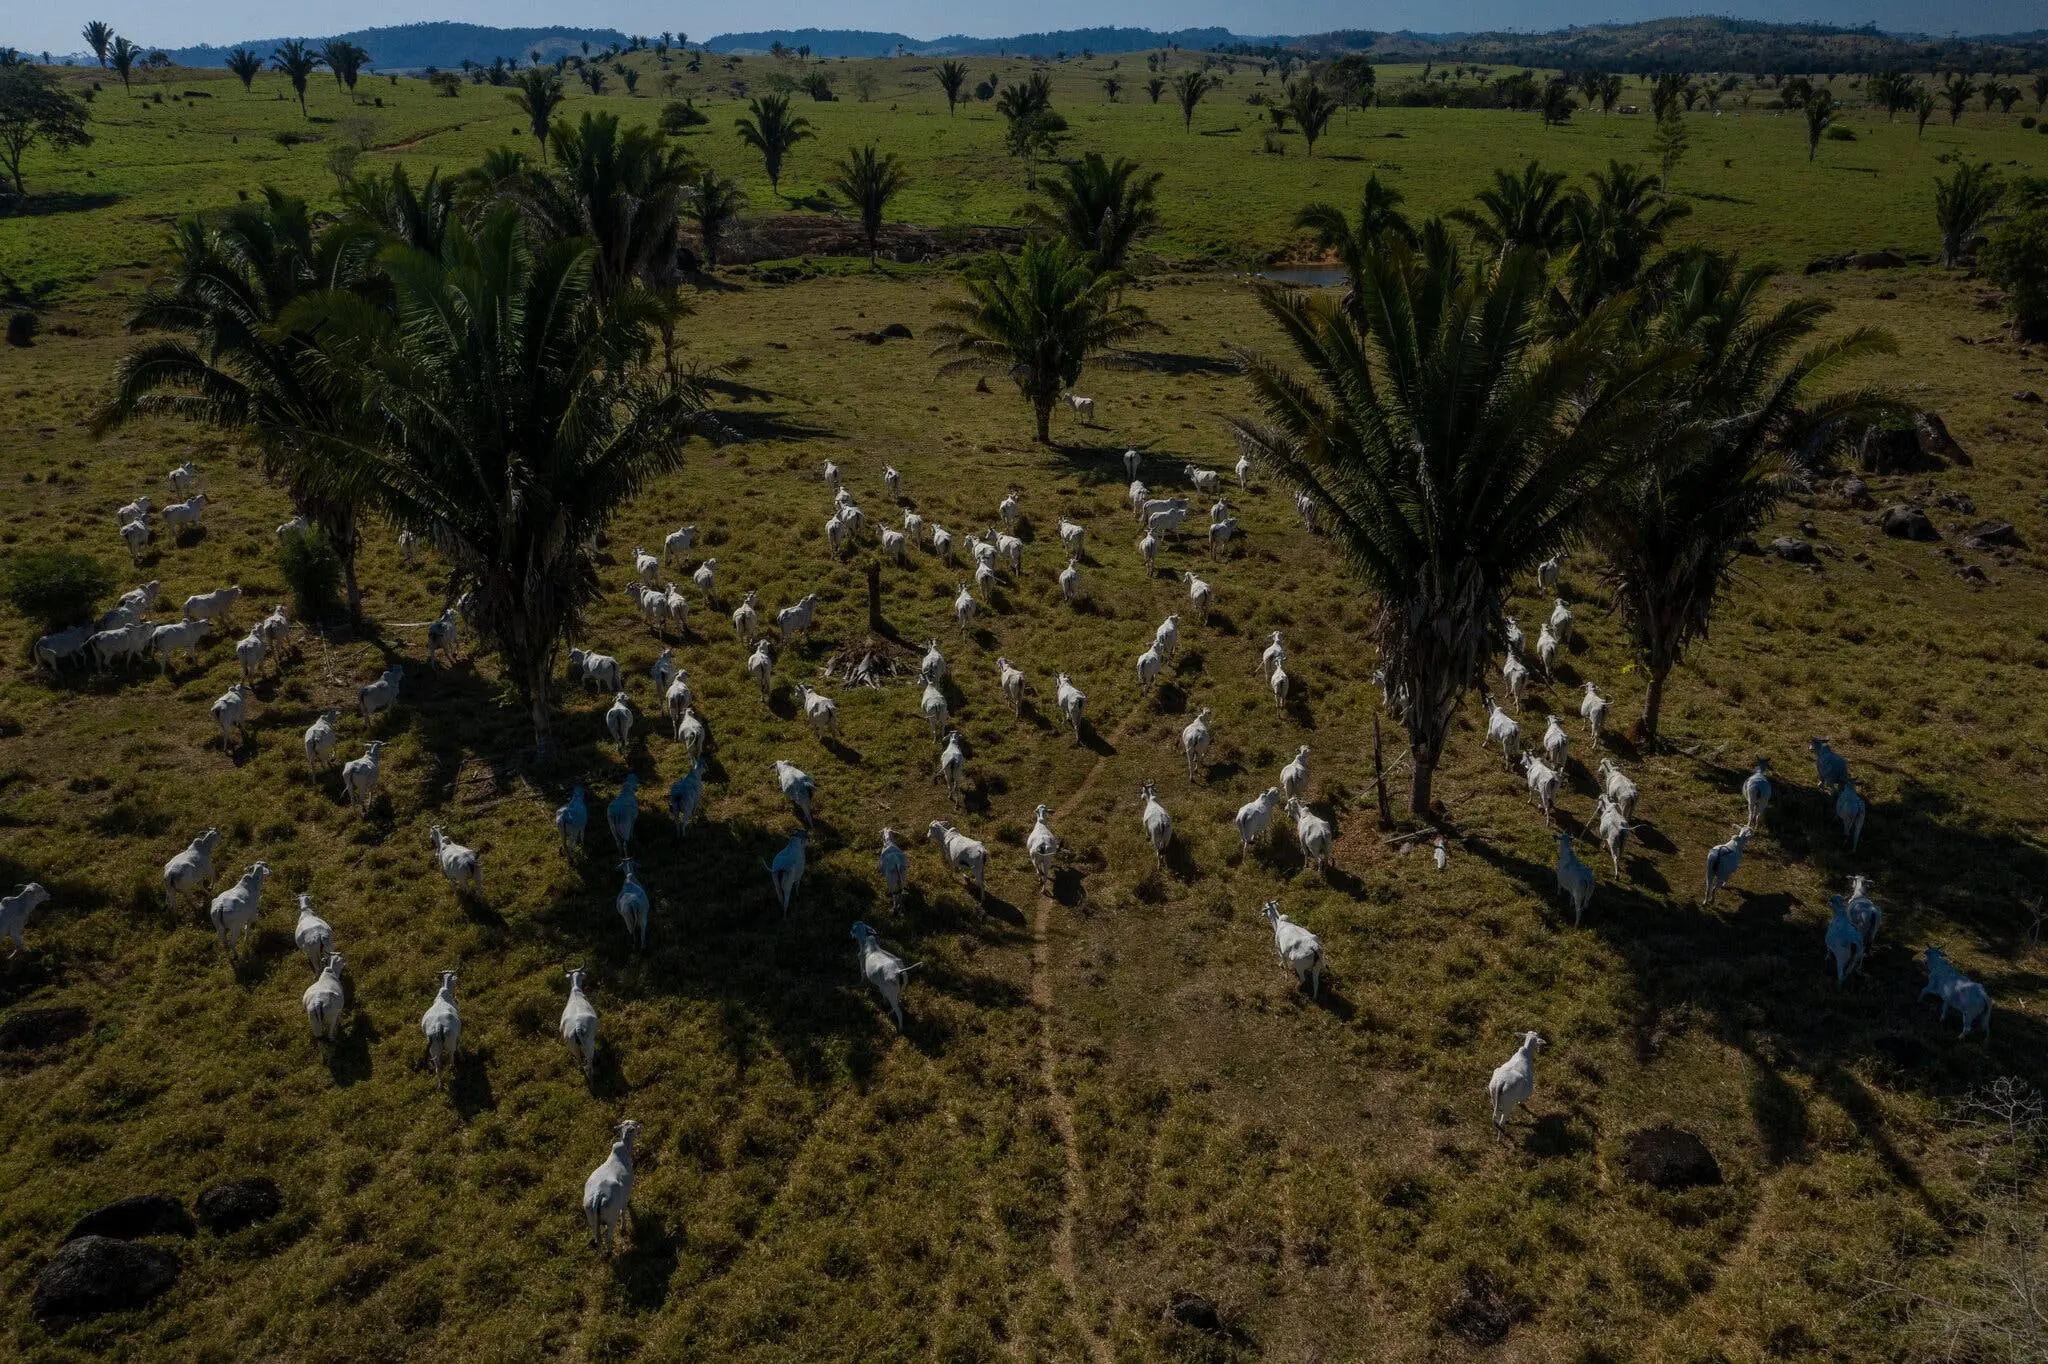 Armando Castanheira Filho’s ranch, Santo Angelo, is outside the protected reserve